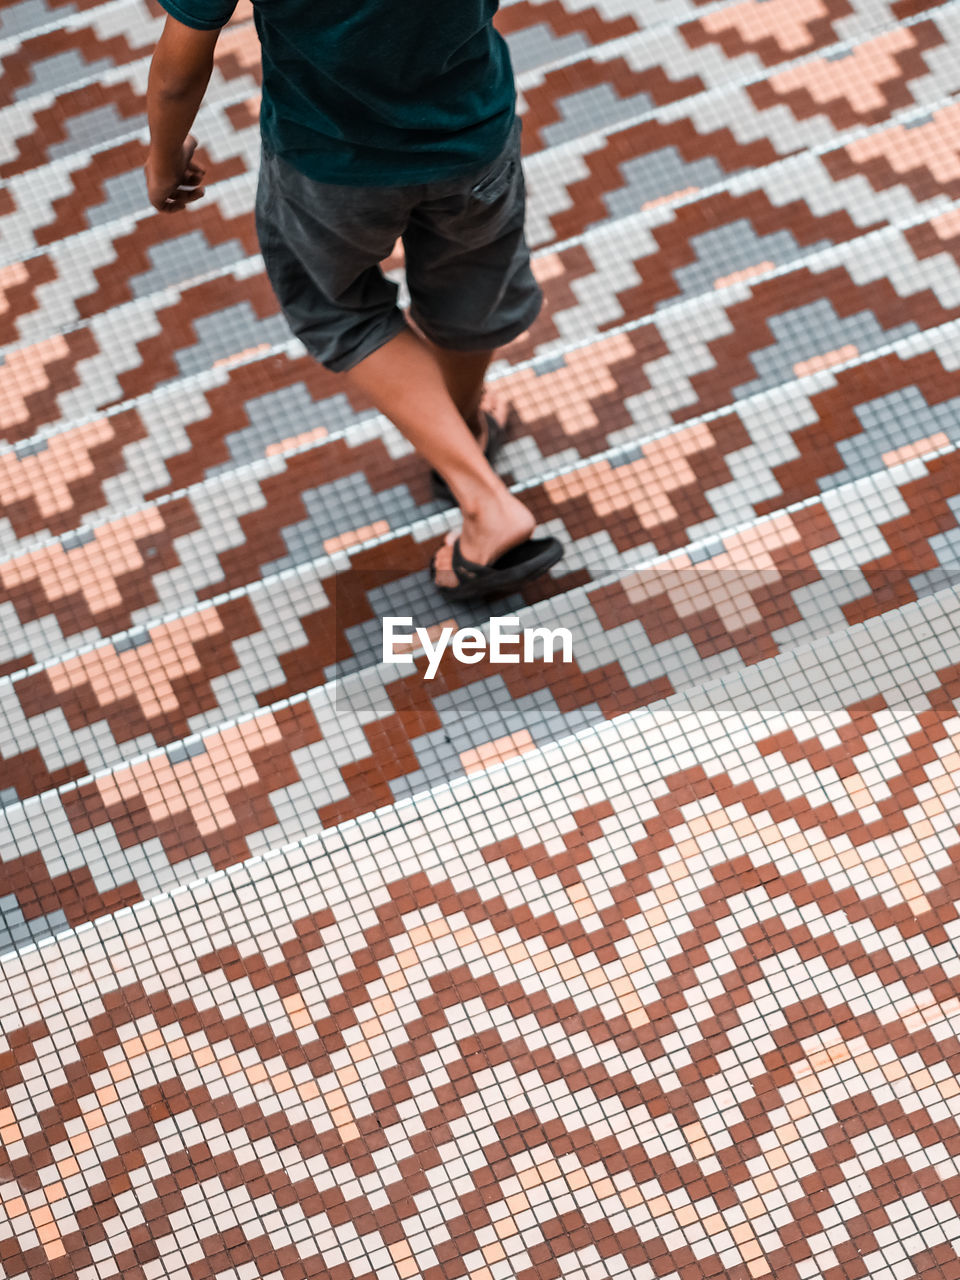 A boy walking down a classic design mosaic steps